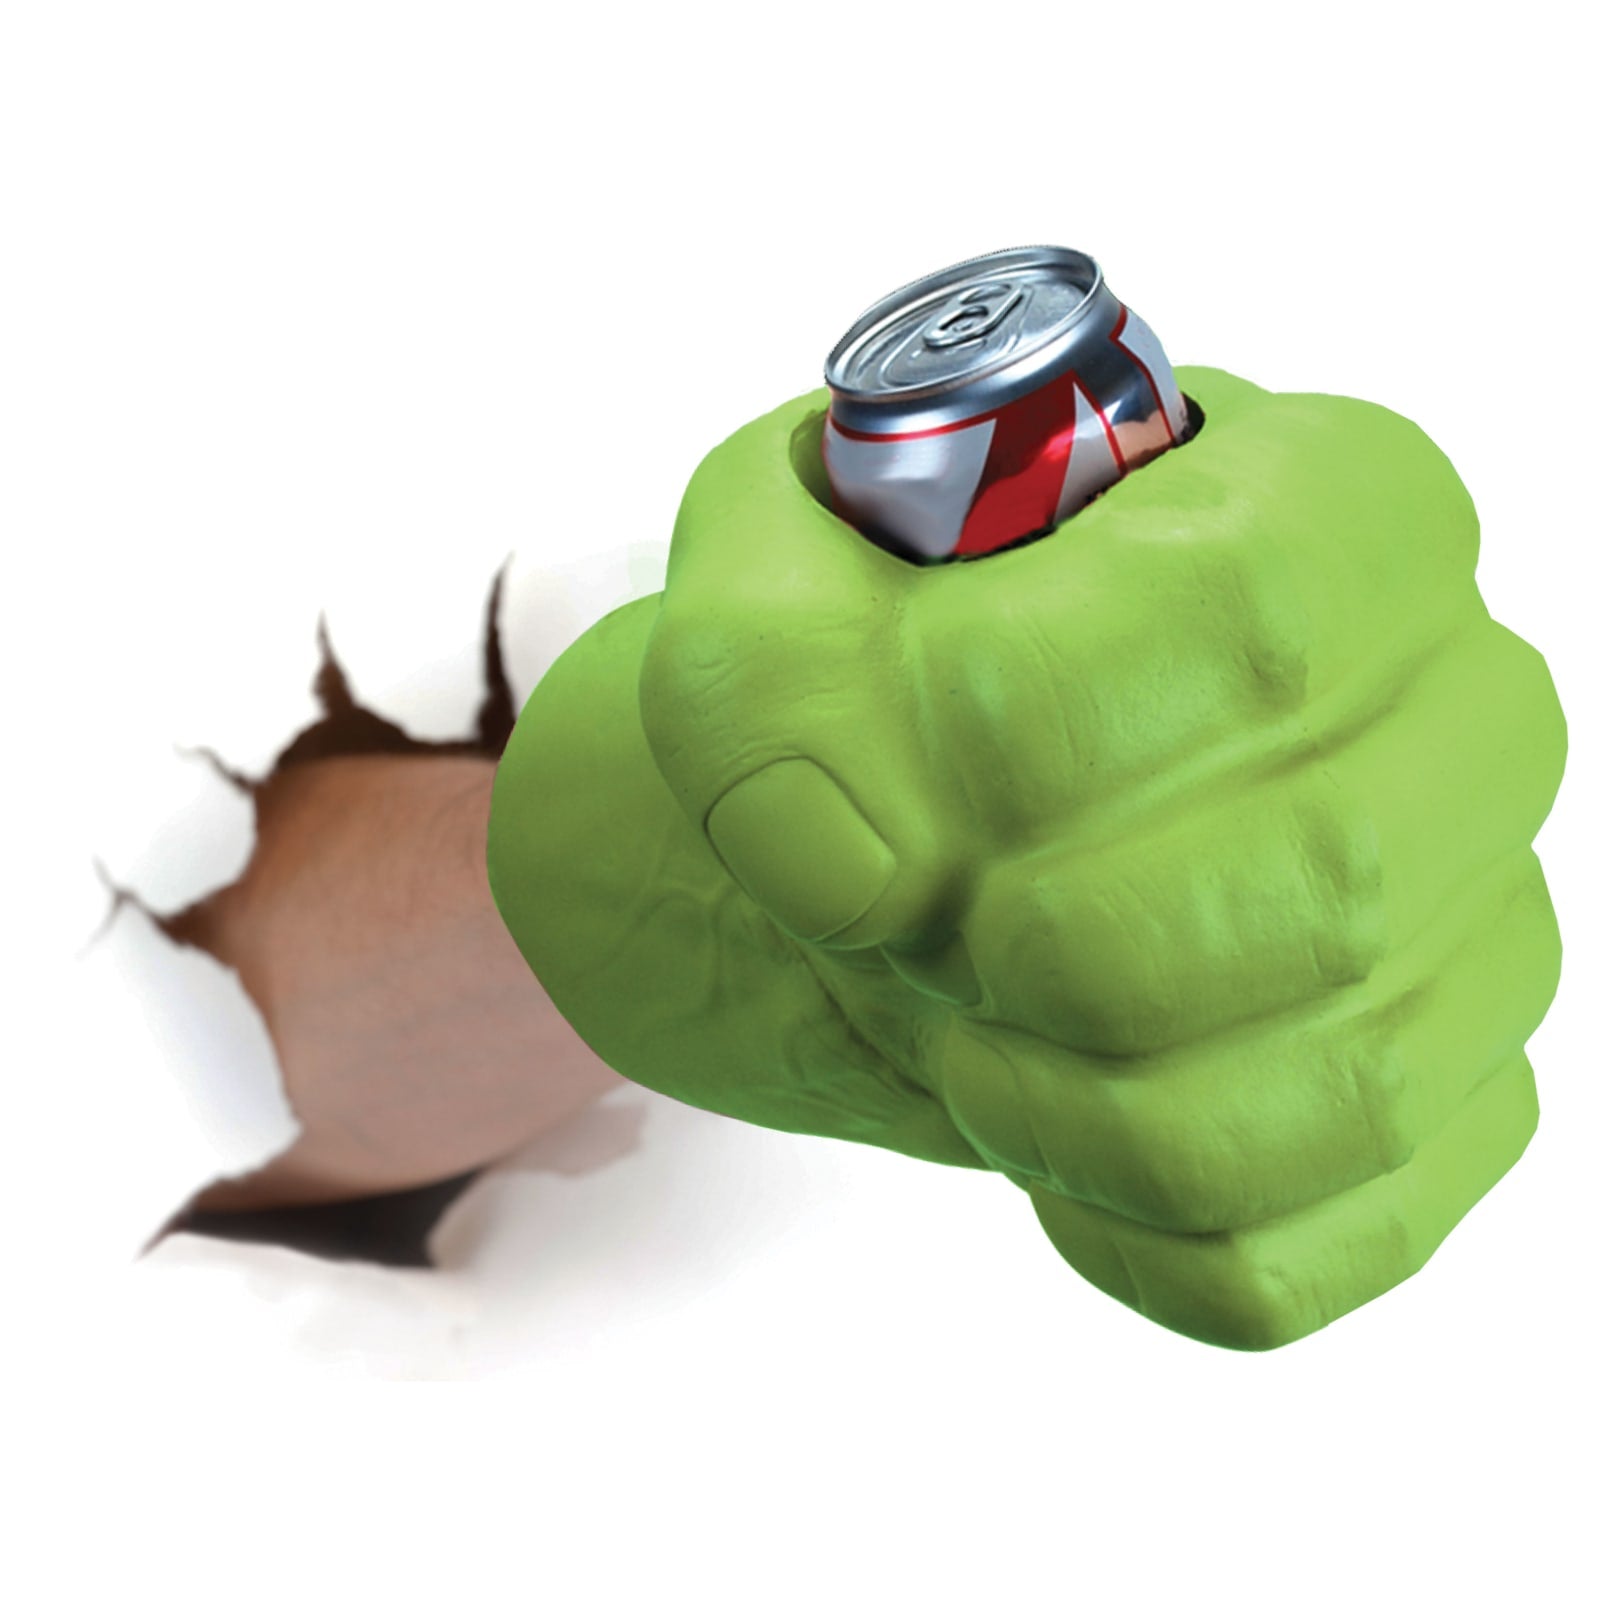 The Beast Drink Kooler - Green